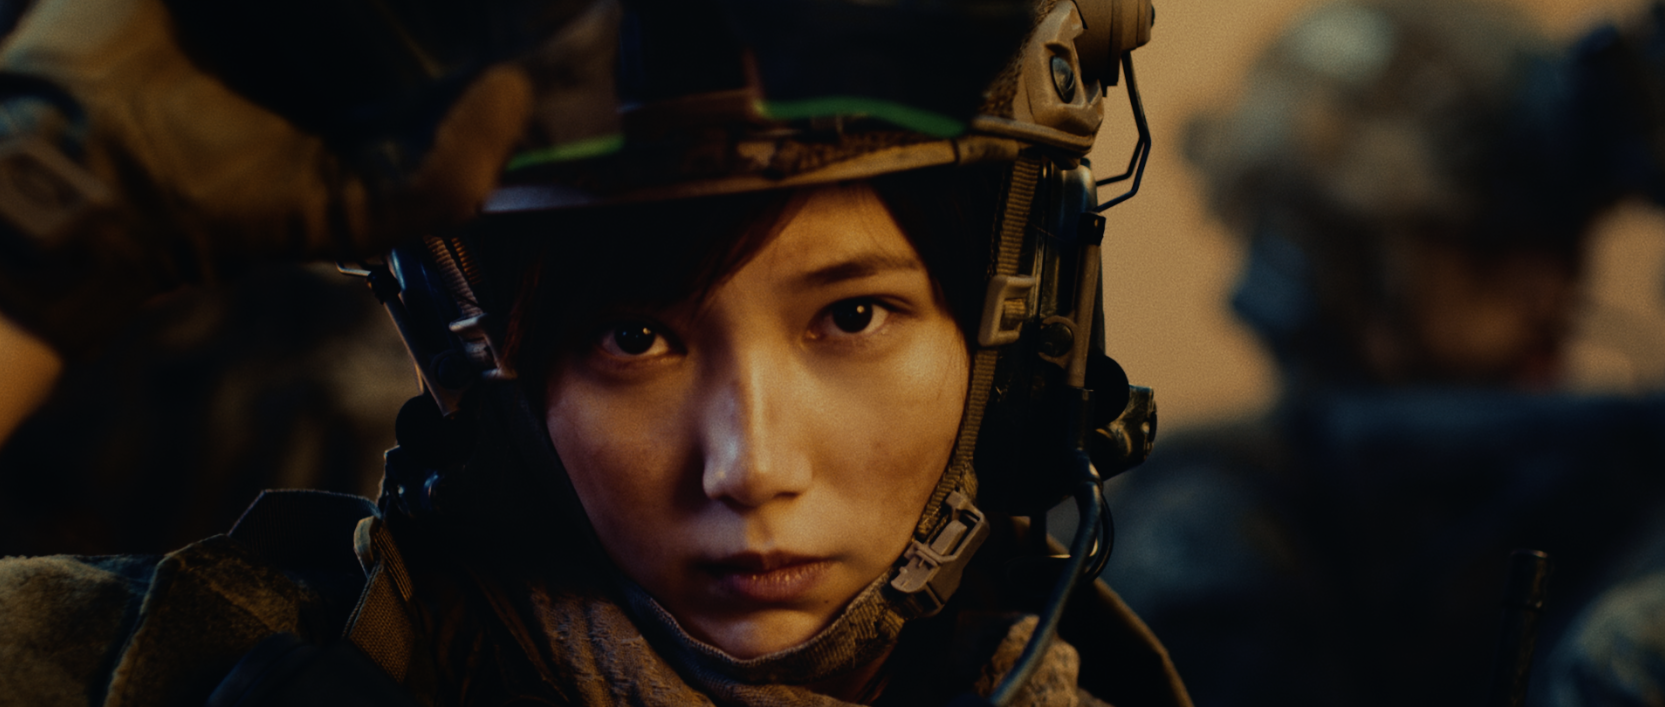 Tsubasa Honda Becomes a Solider in Apocalyptic Call of Duty: Modern Warfare Trailer